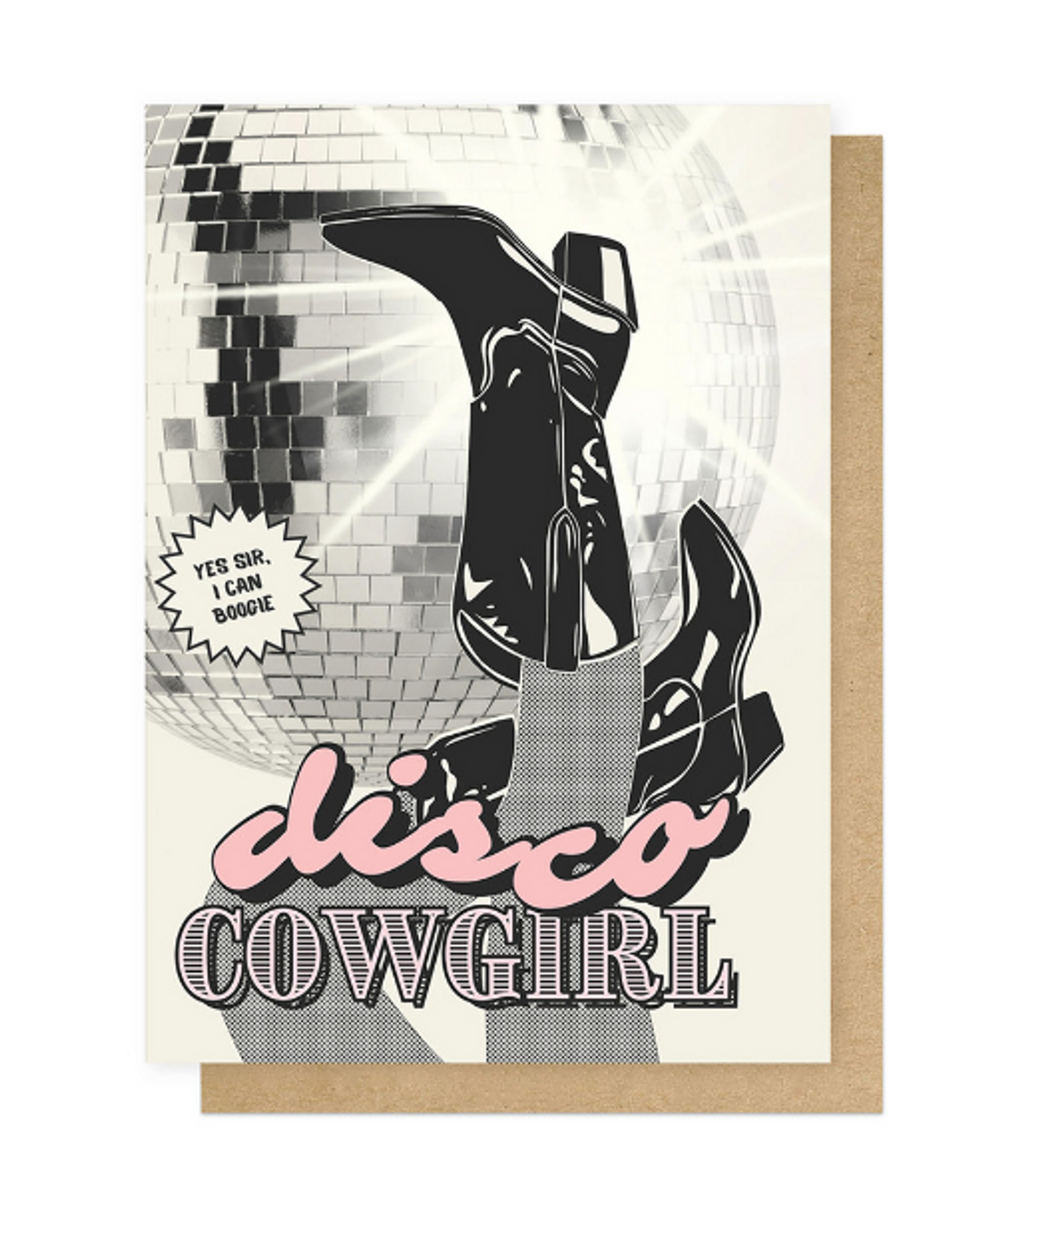 Disco Cowgirl - Greeting Card